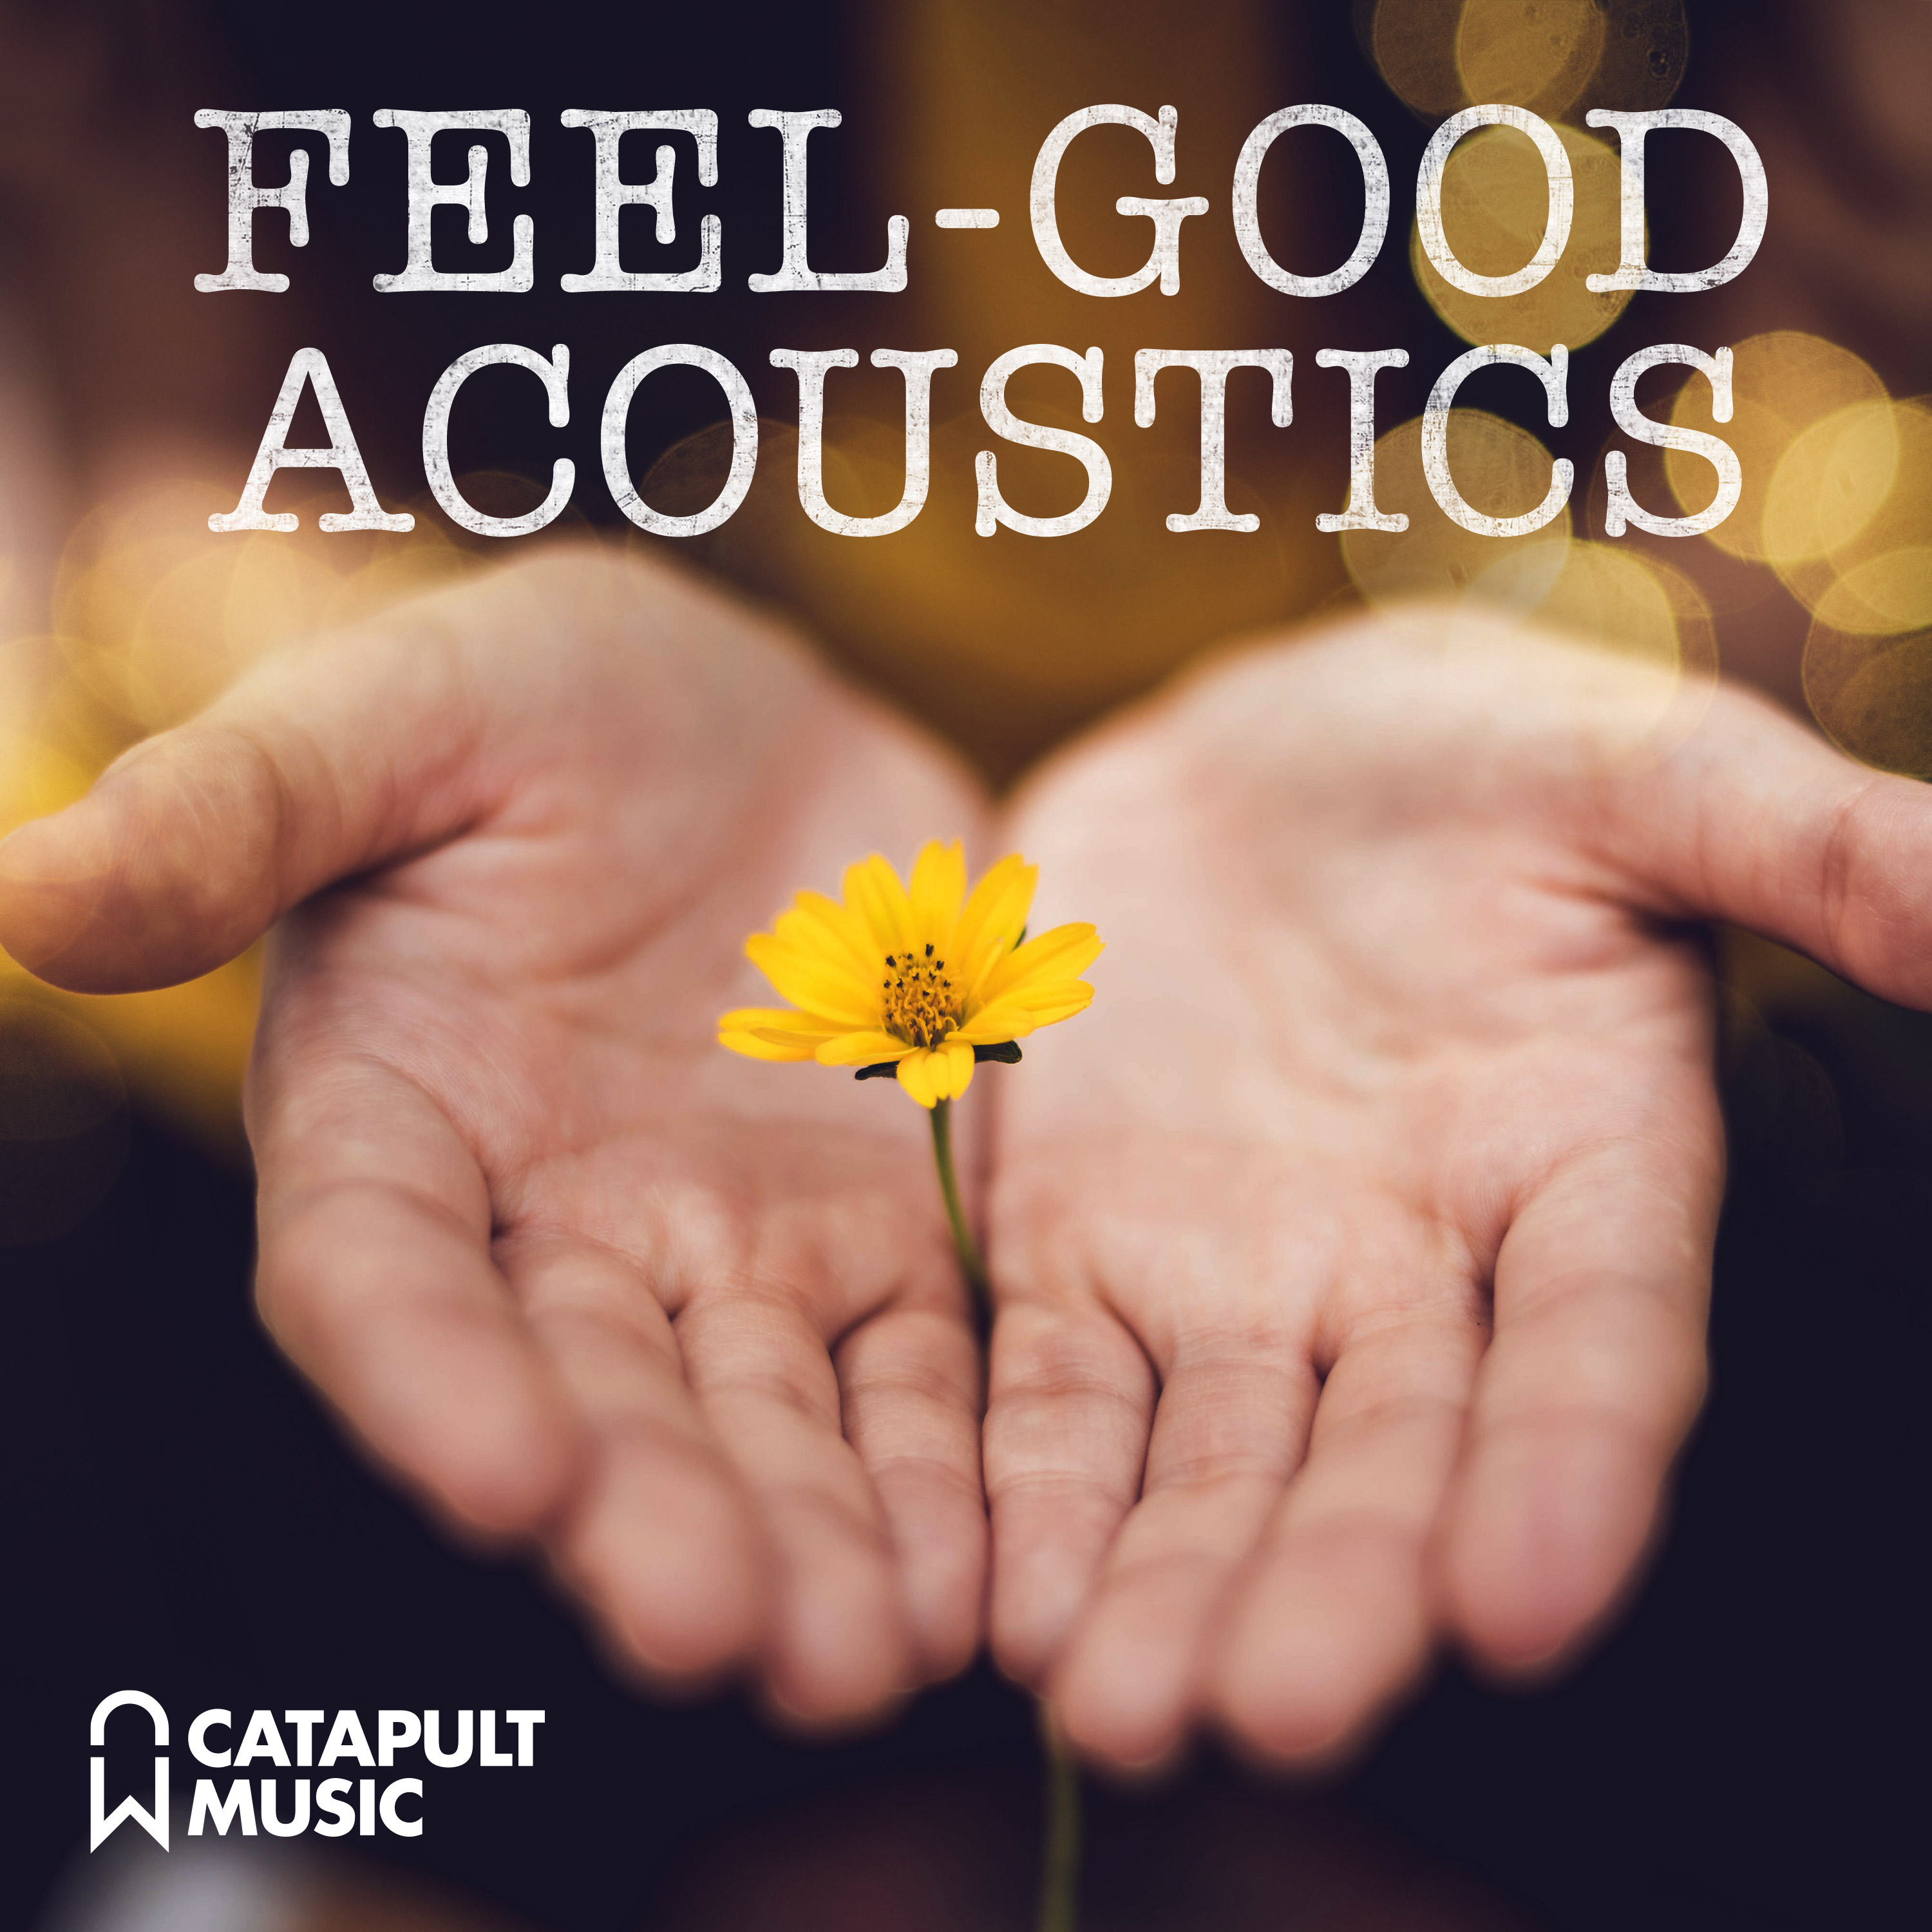 Feel-Good Acoustics